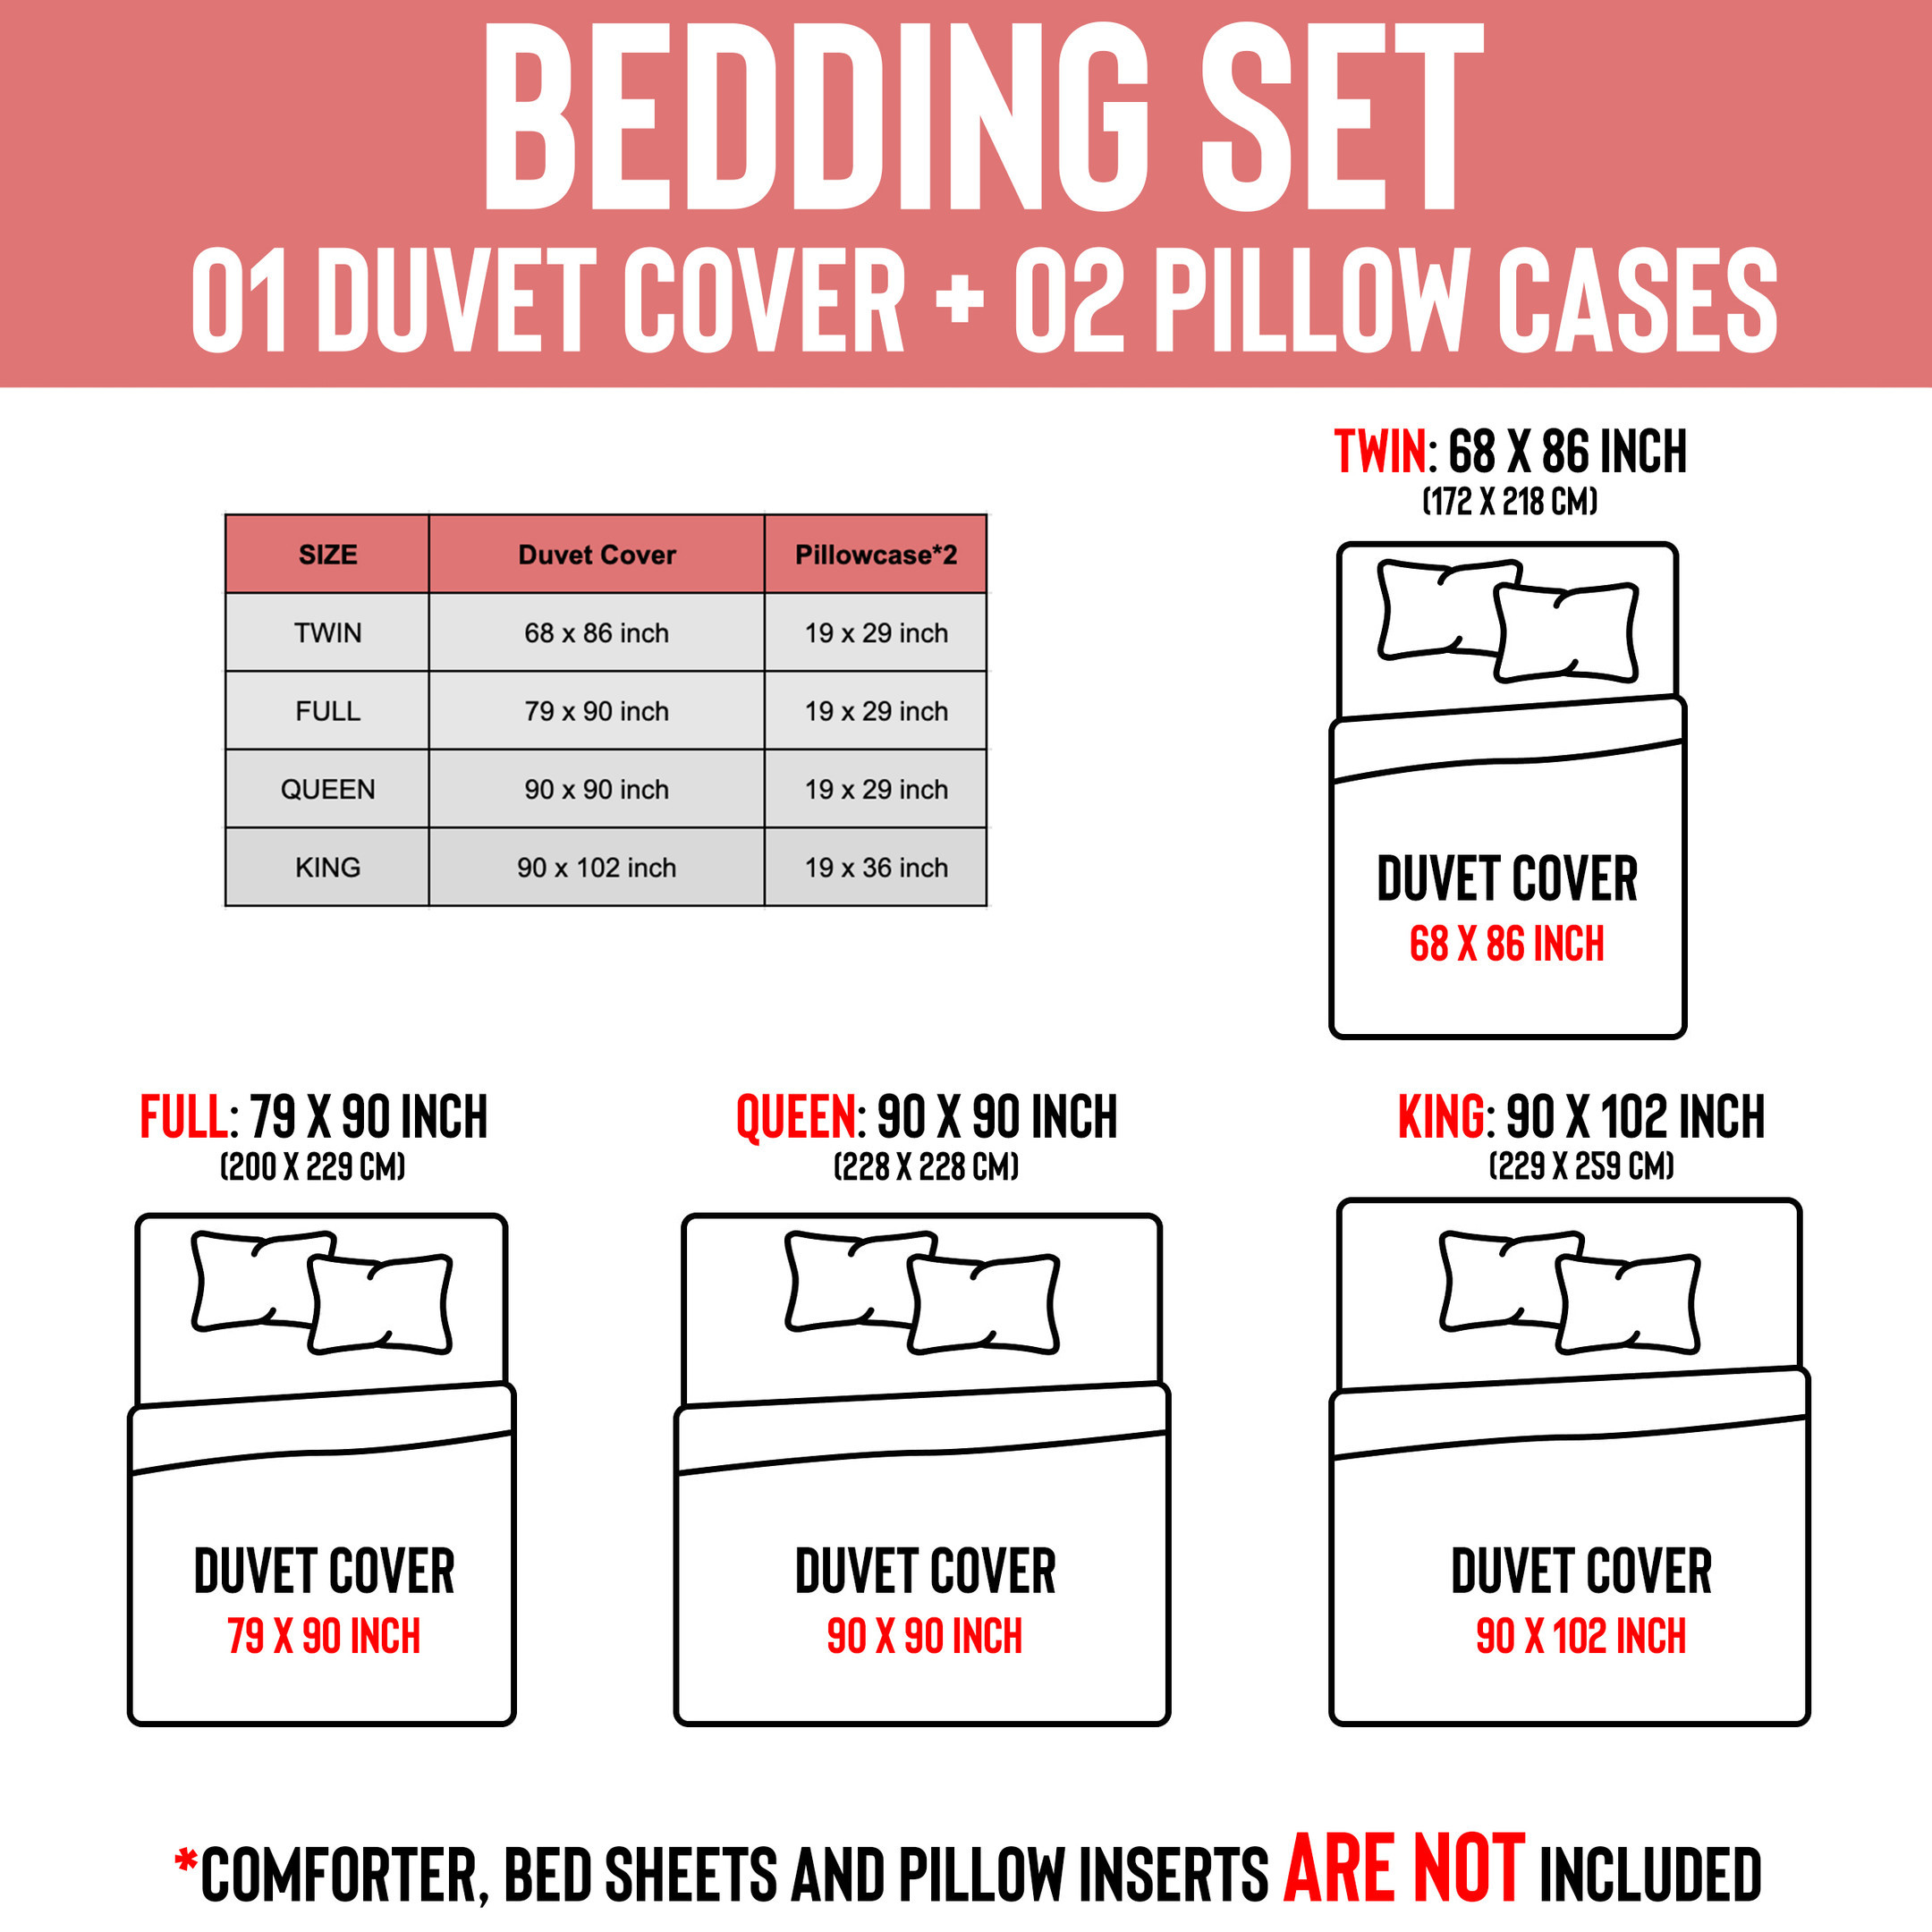 Personalized Baseball Simple Custom Name Duvet Cover Bedding Set